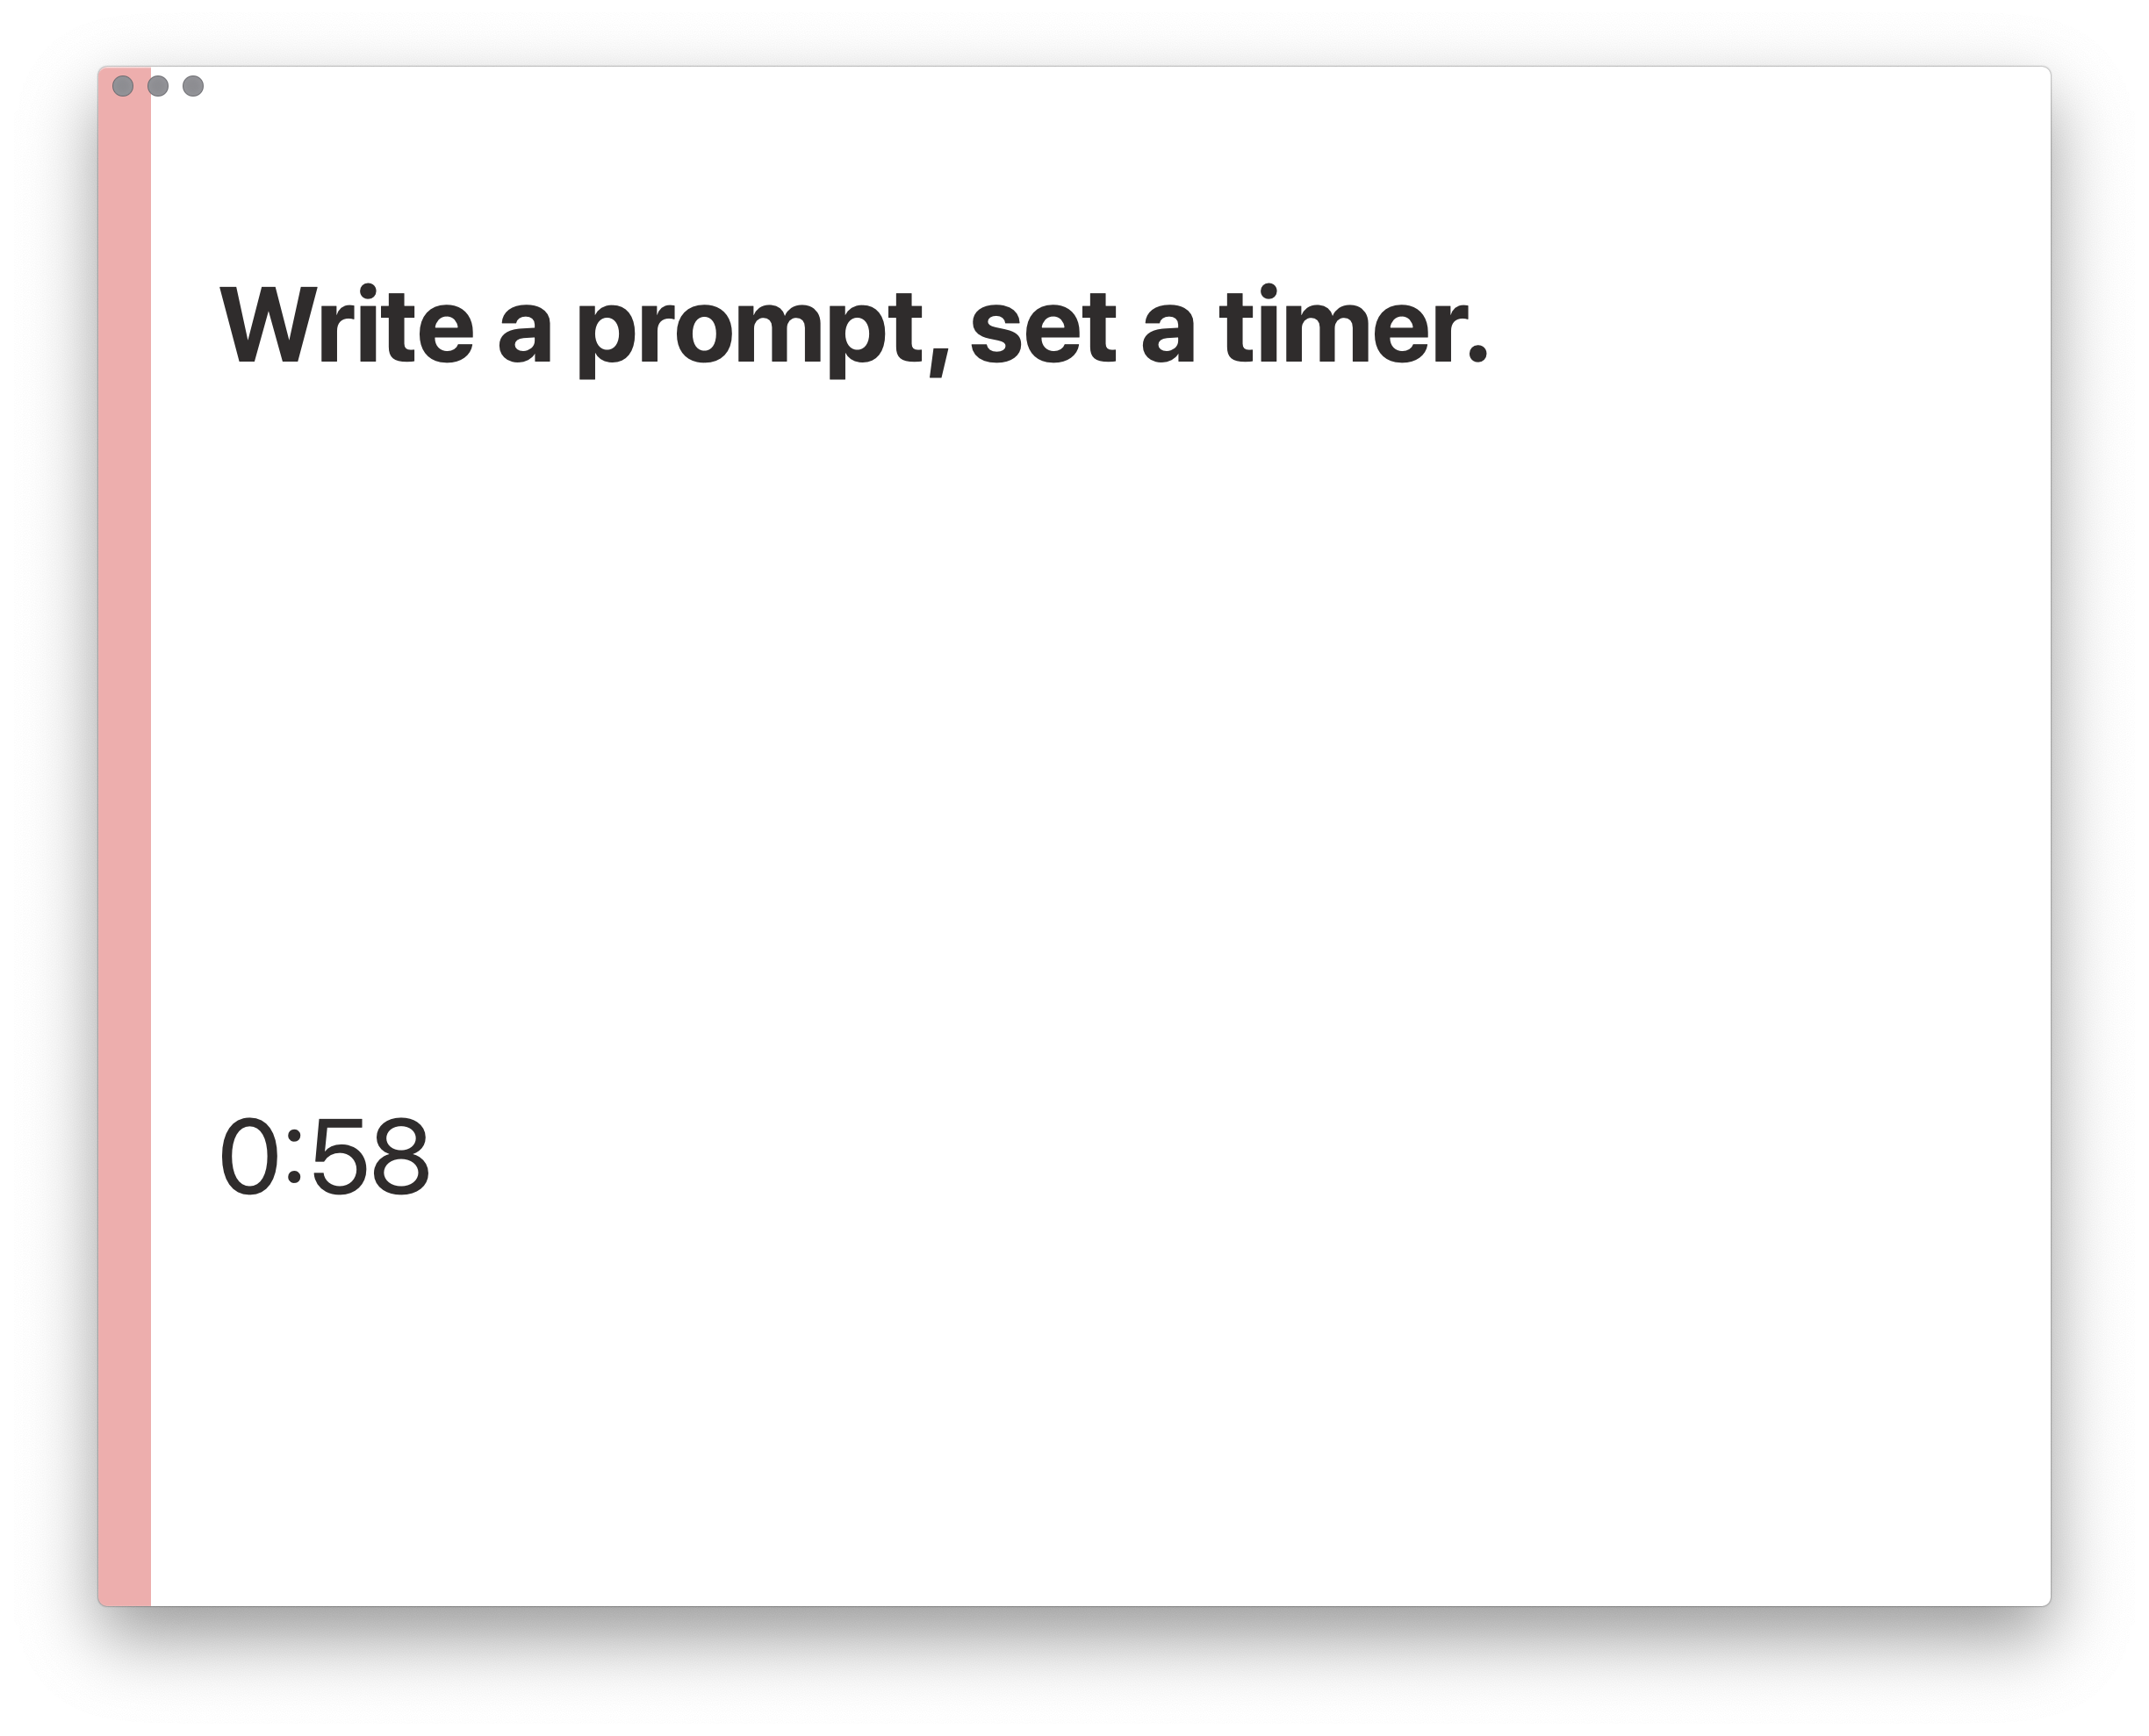 Write a prompt, set a timer.